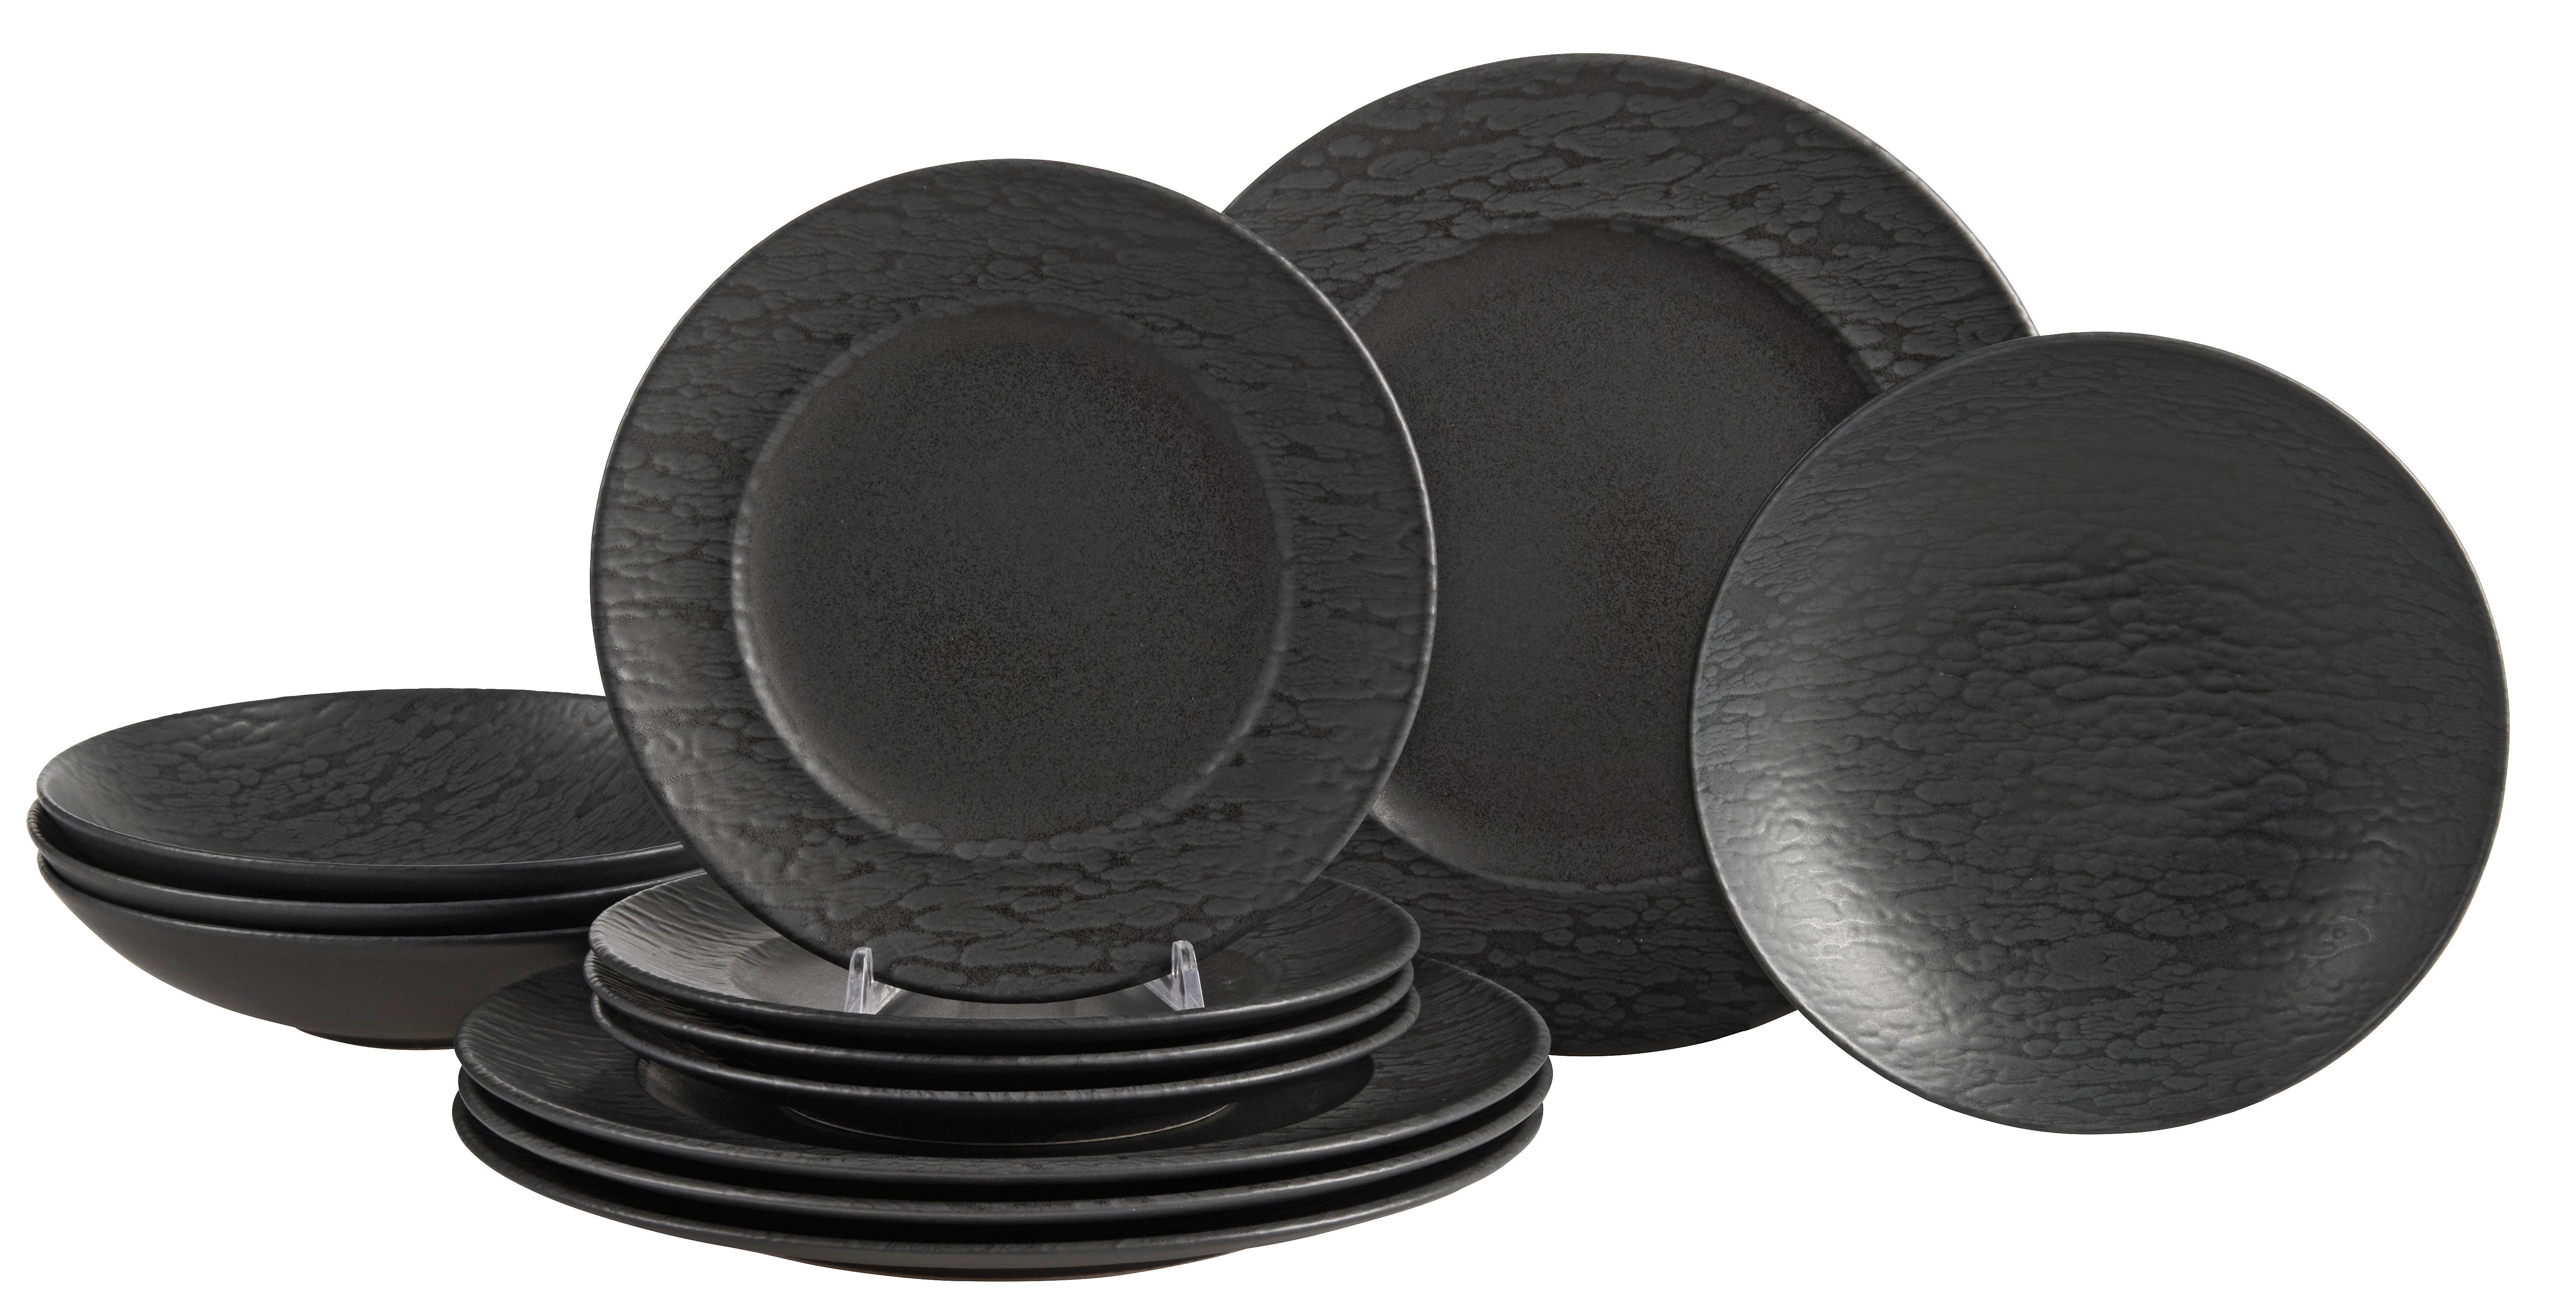 Tafelservice Black Vintage in Schwarz 12-teilig - Schwarz, Modern, Keramik (1/1/1cm) - Premium Living